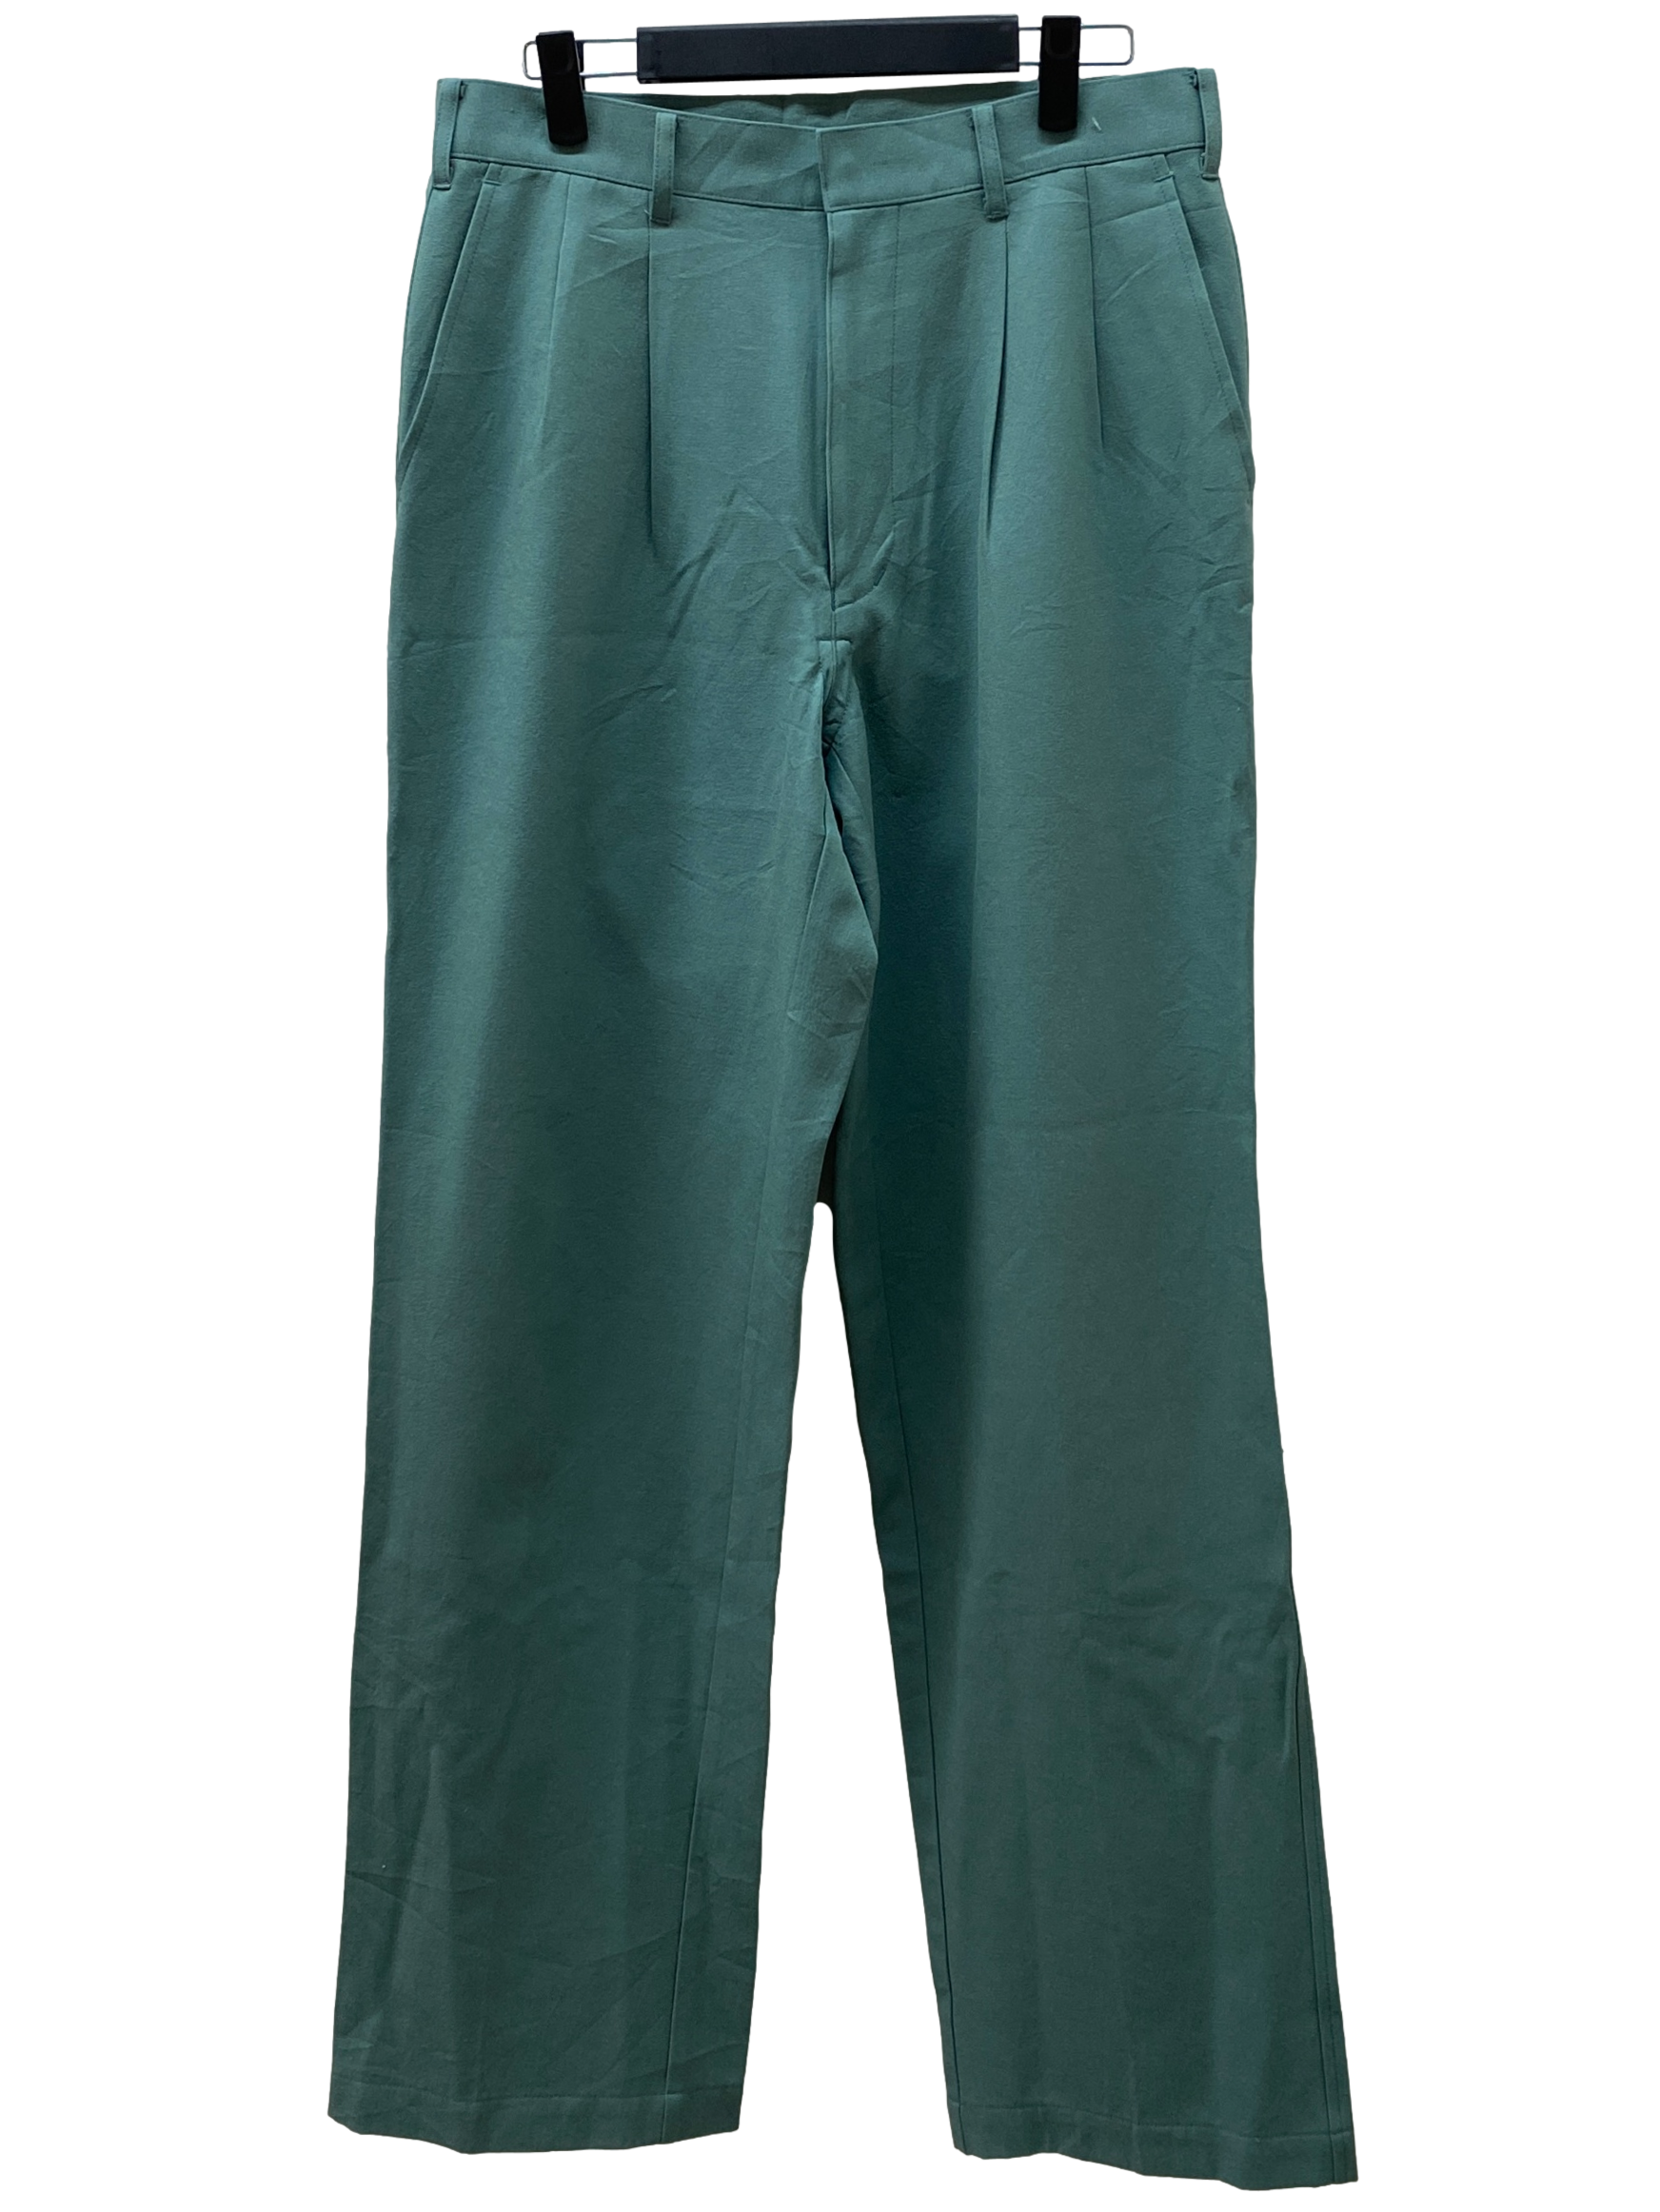 Ocean Blue Green Pants